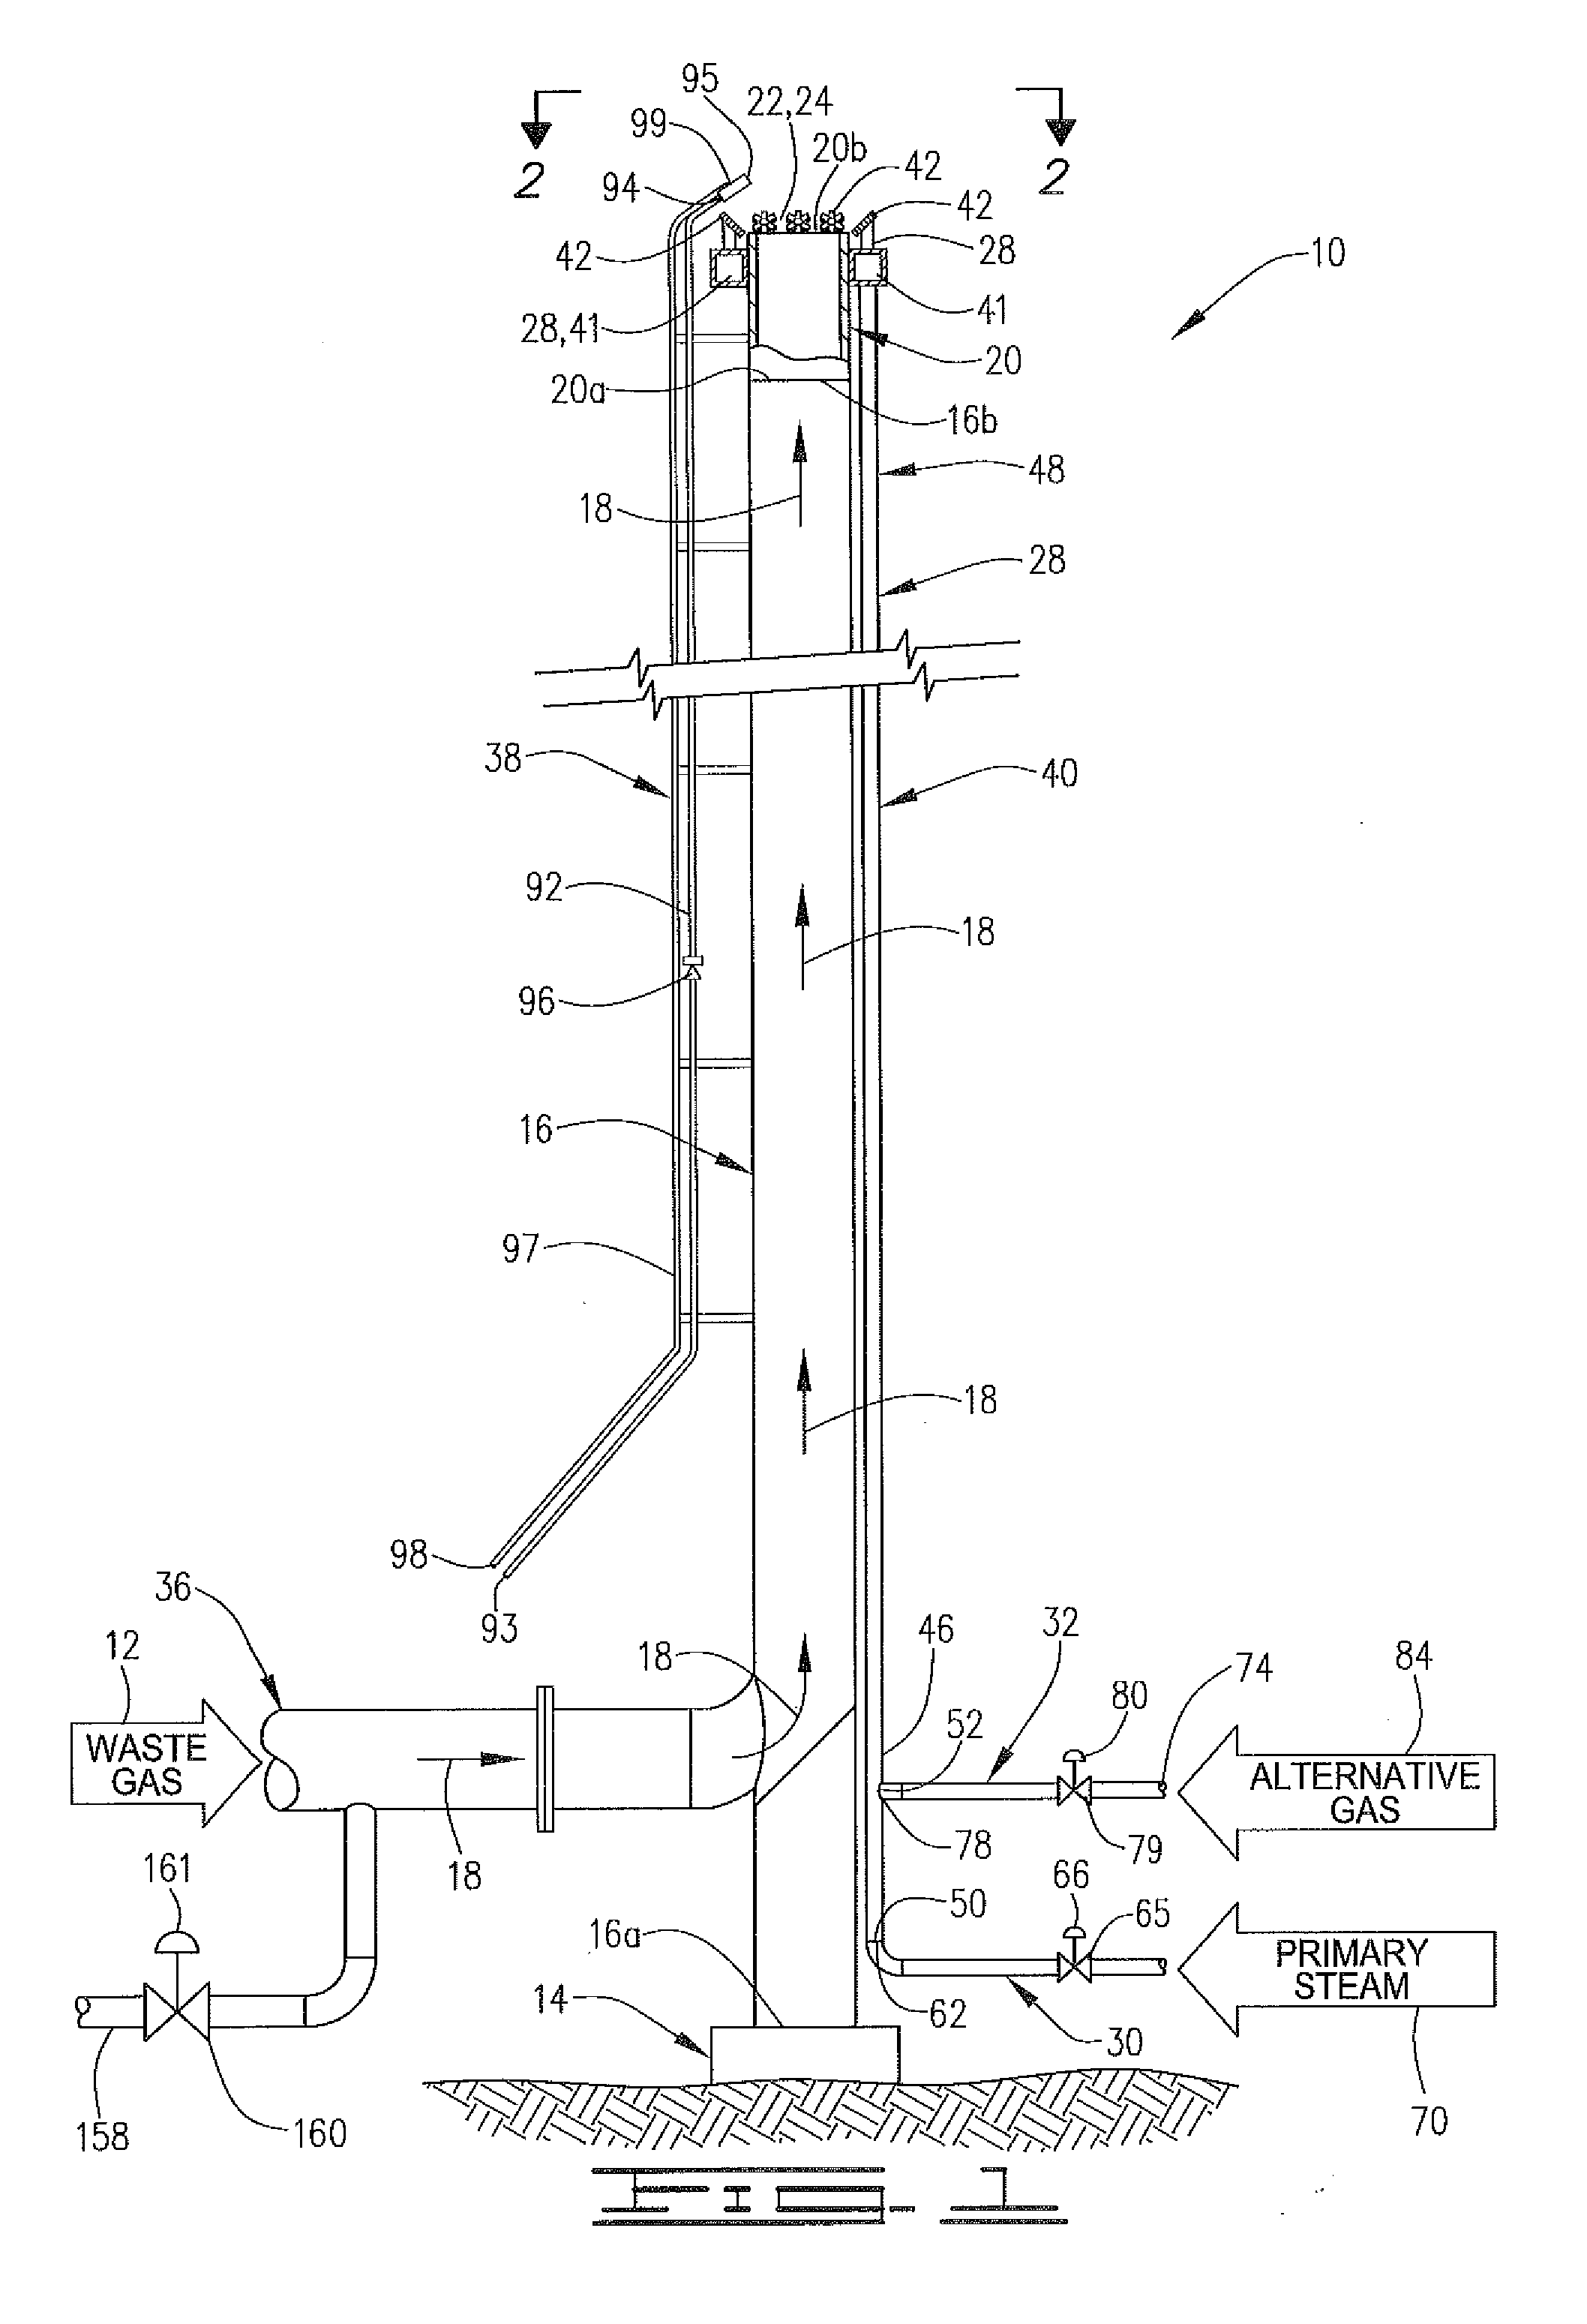 Hybrid flare apparatus and method